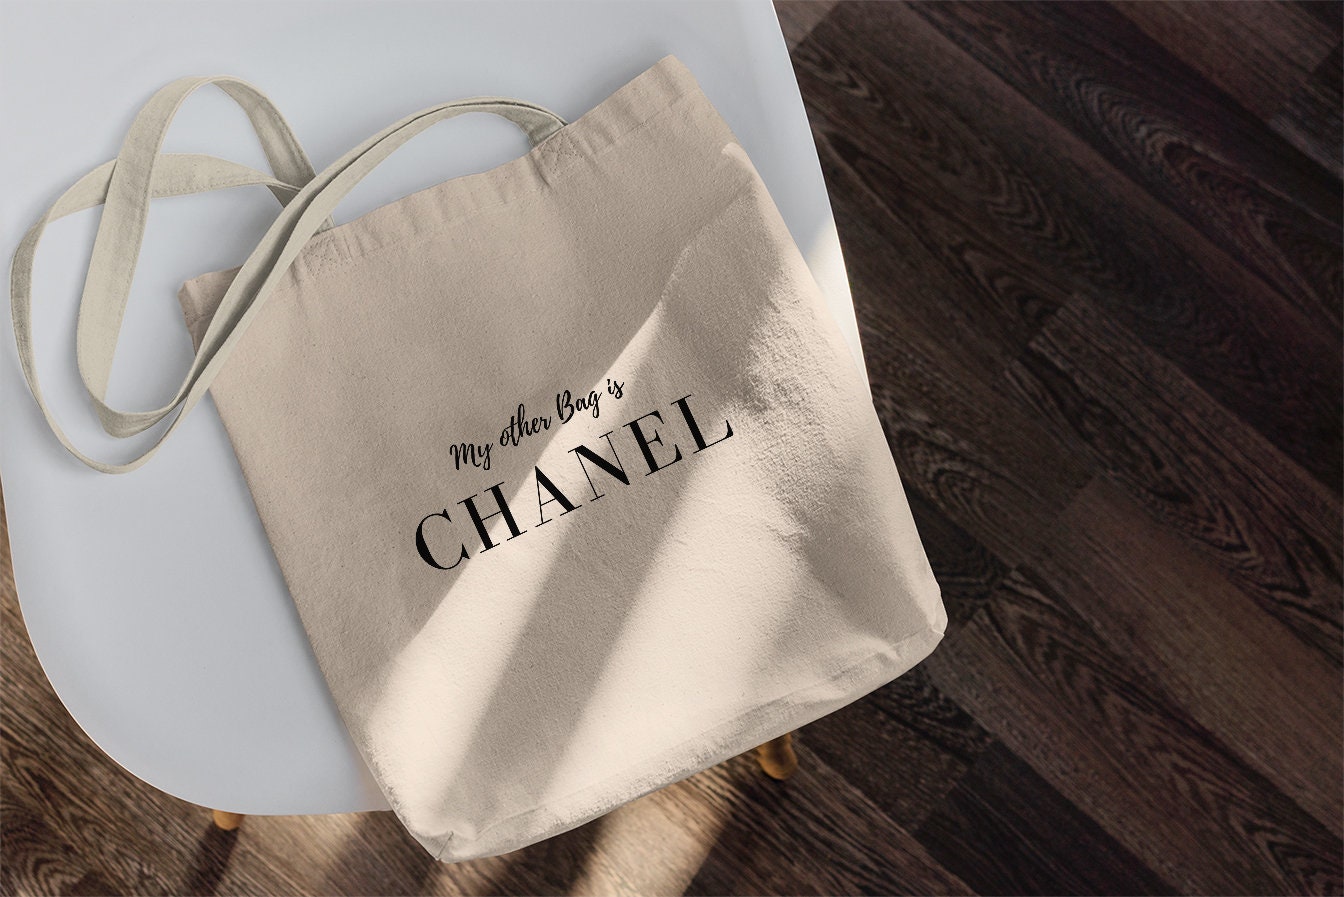 My other Bag is Chanel Jutebeutel Stoffbeutel Baumwolle - .de